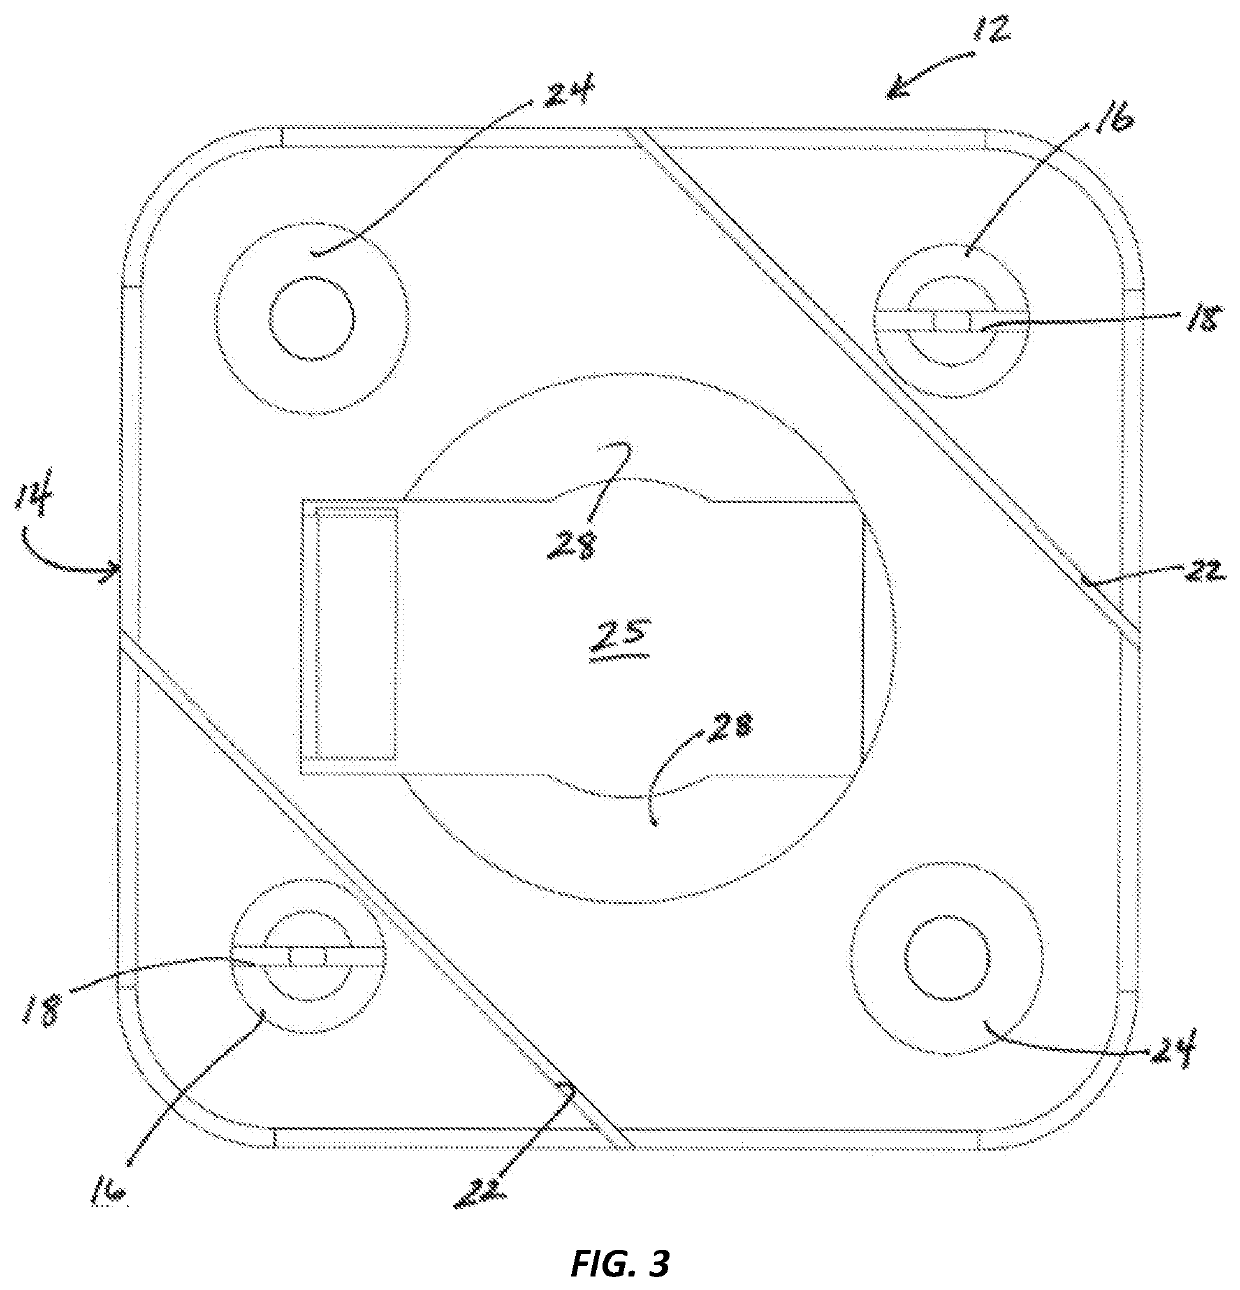 Interchangeable fastener system